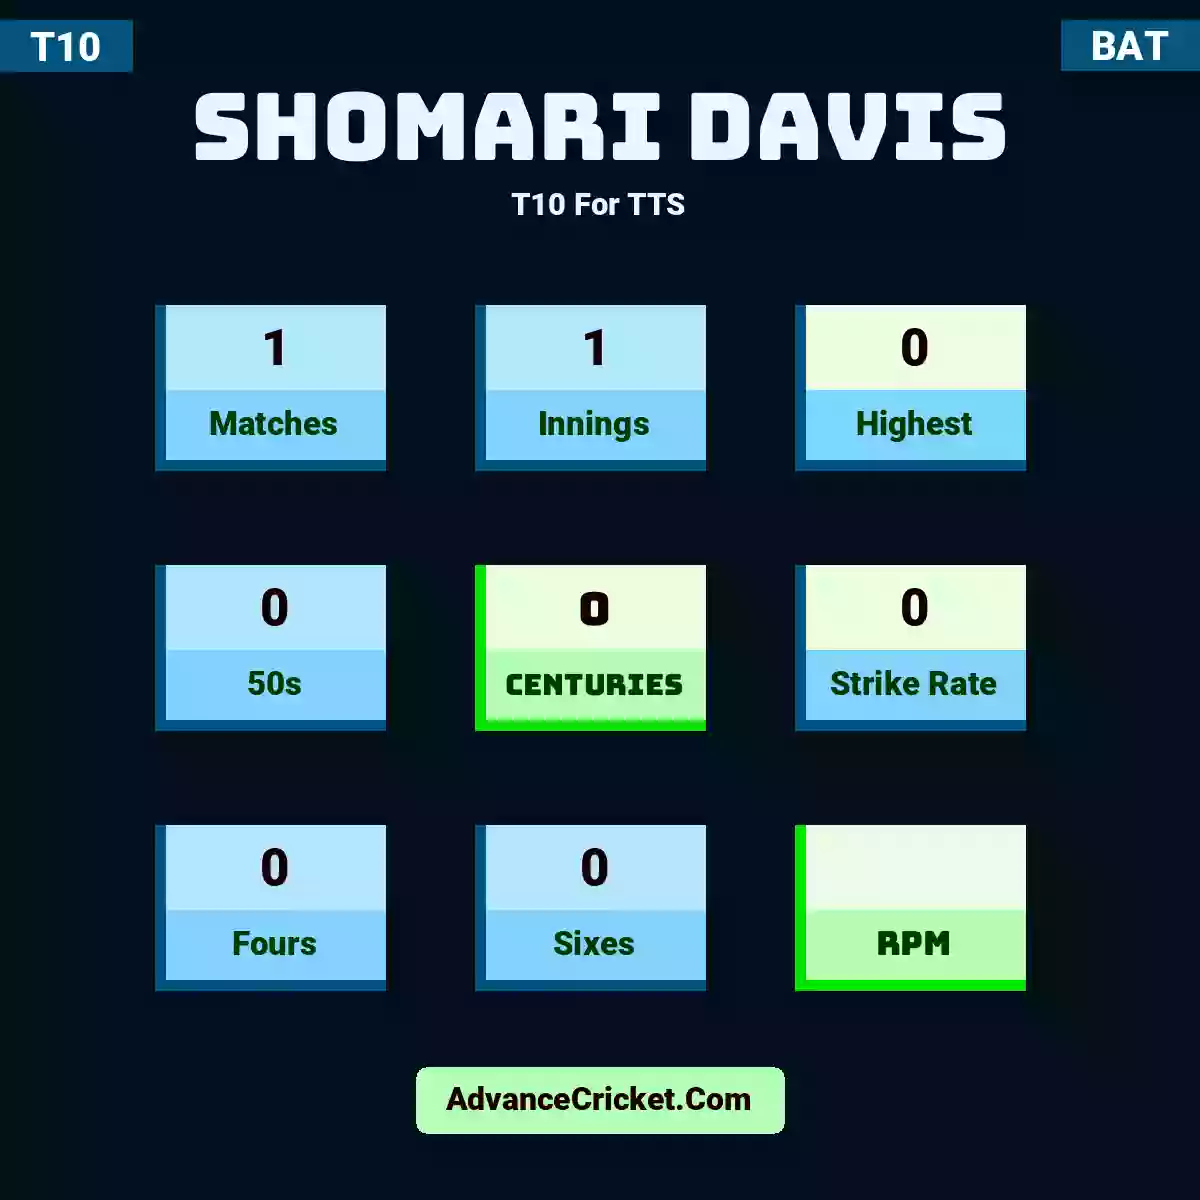 Shomari Davis T10  For TTS, Shomari Davis played 1 matches, scored 0 runs as highest, 0 half-centuries, and 0 centuries, with a strike rate of 0. S.Davis hit 0 fours and 0 sixes.